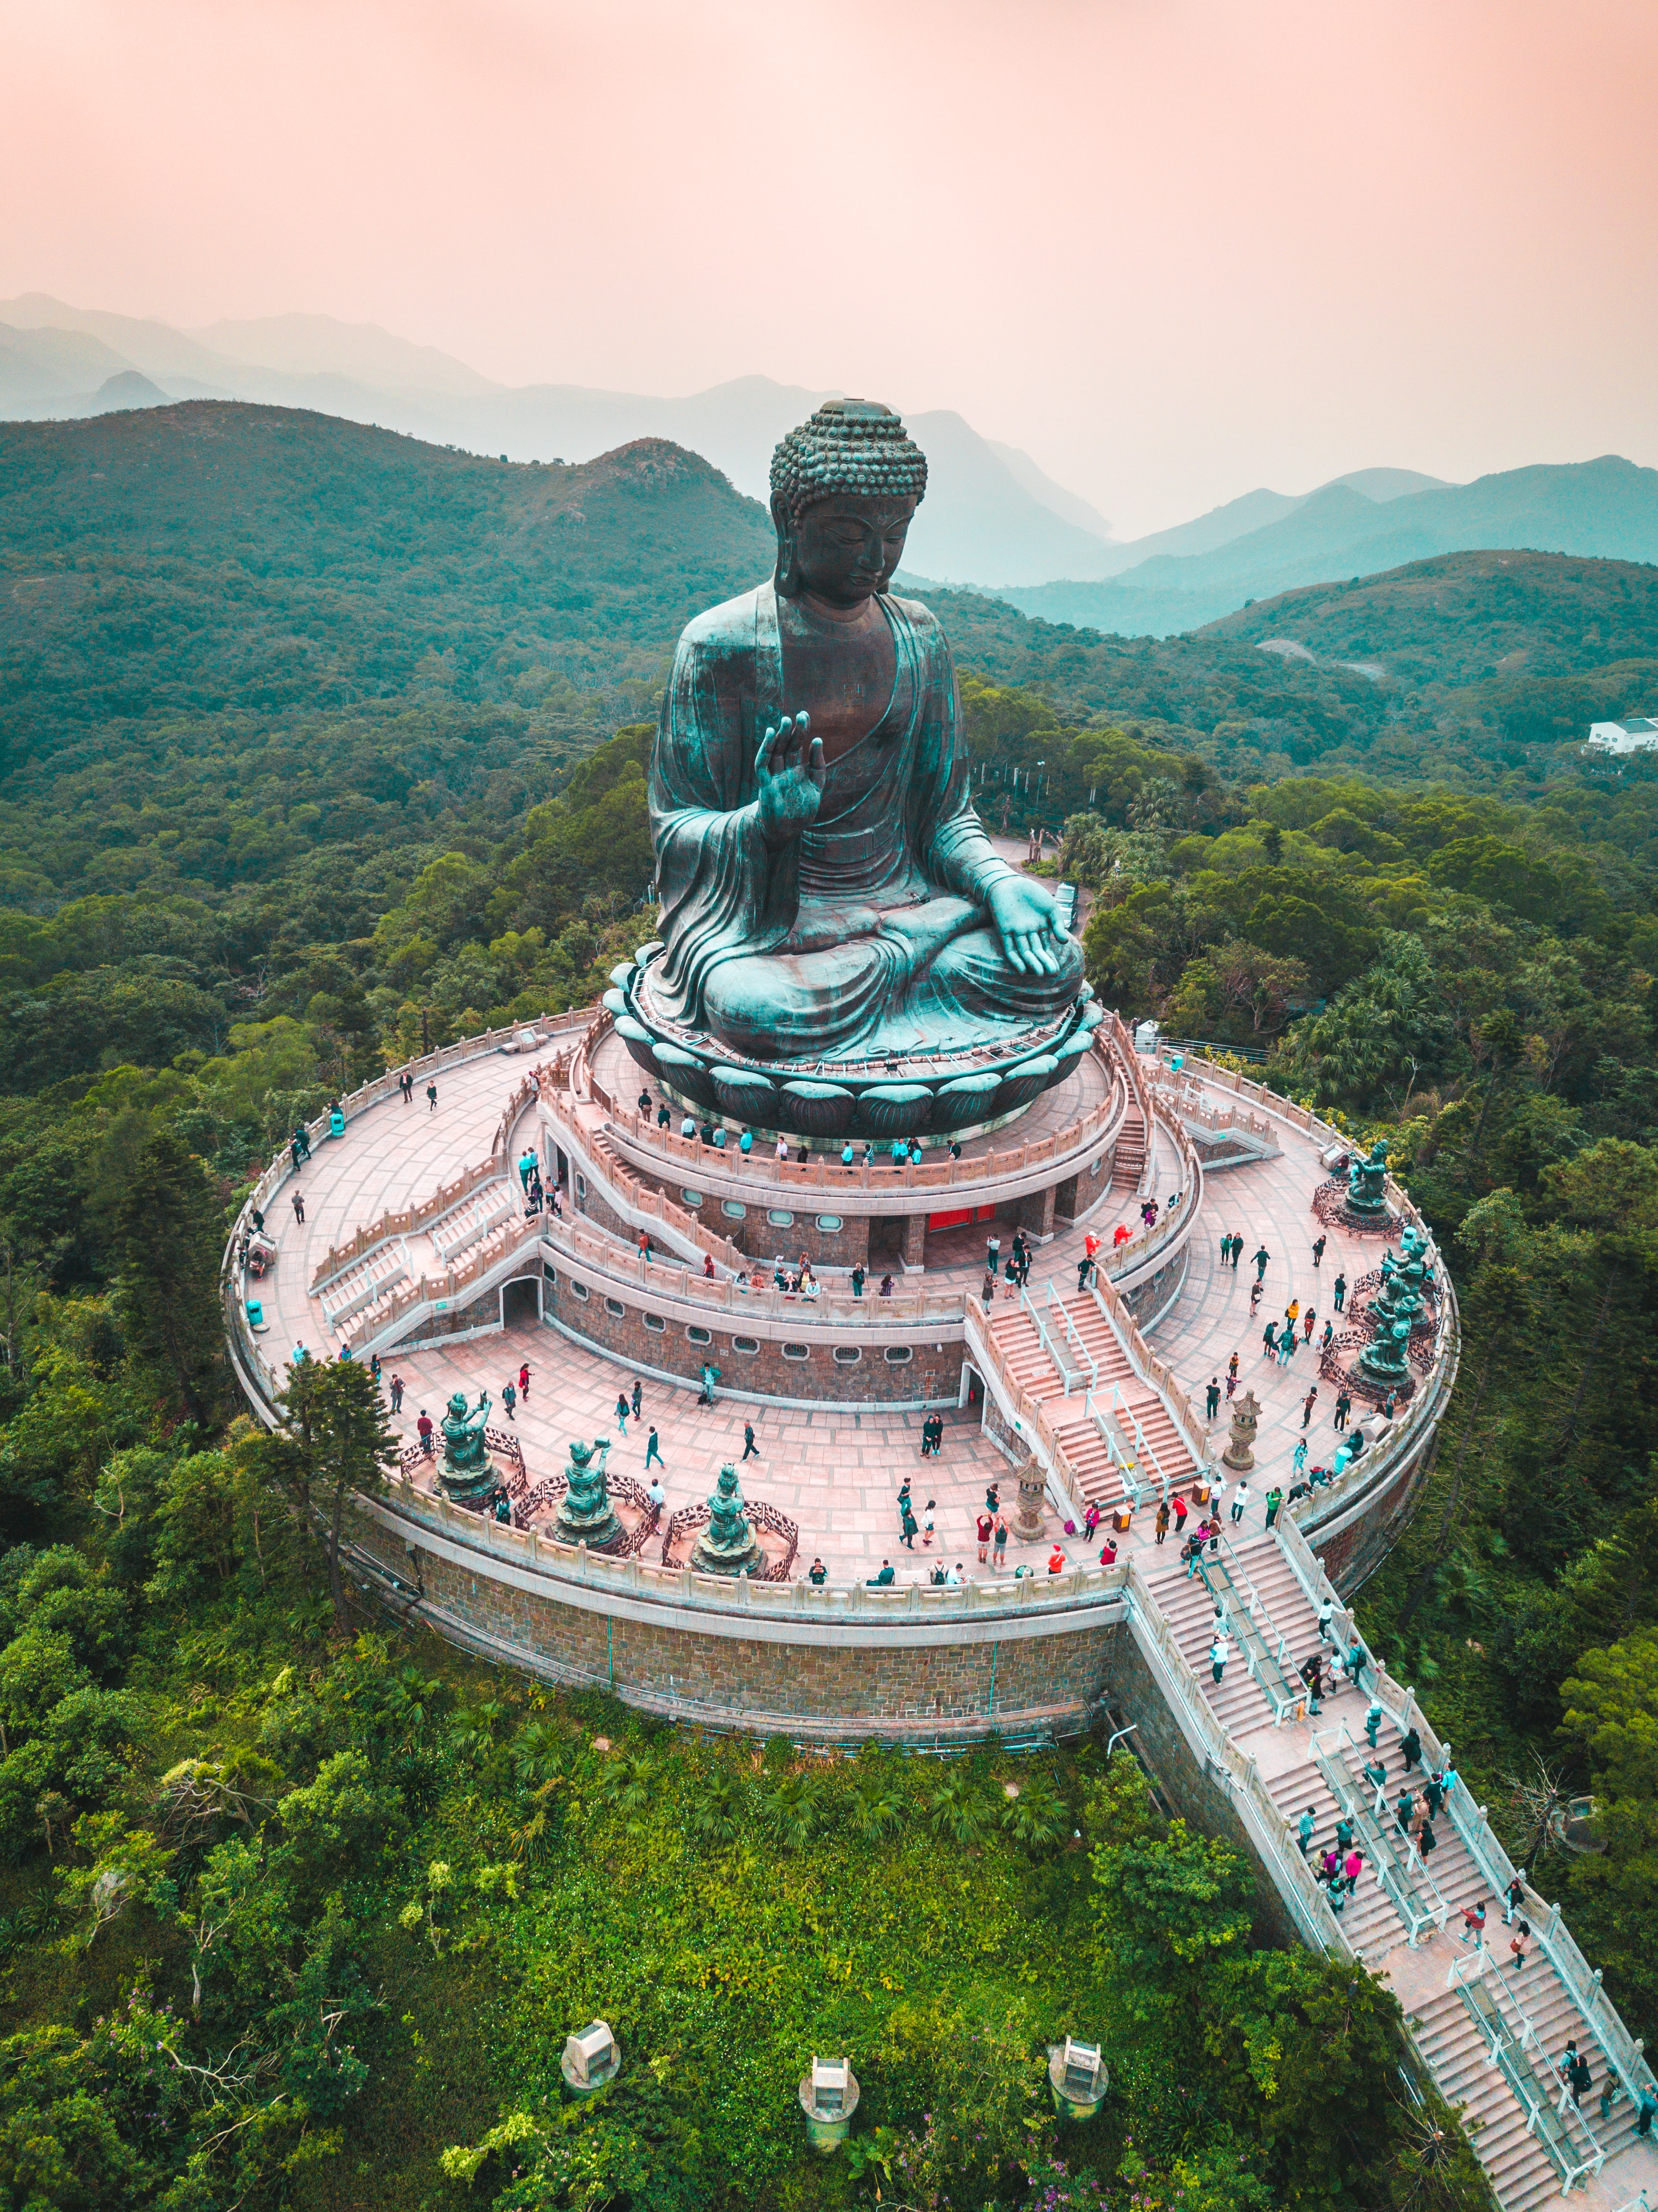 Big Buddha-Hong Kong photo by Jason Cooper